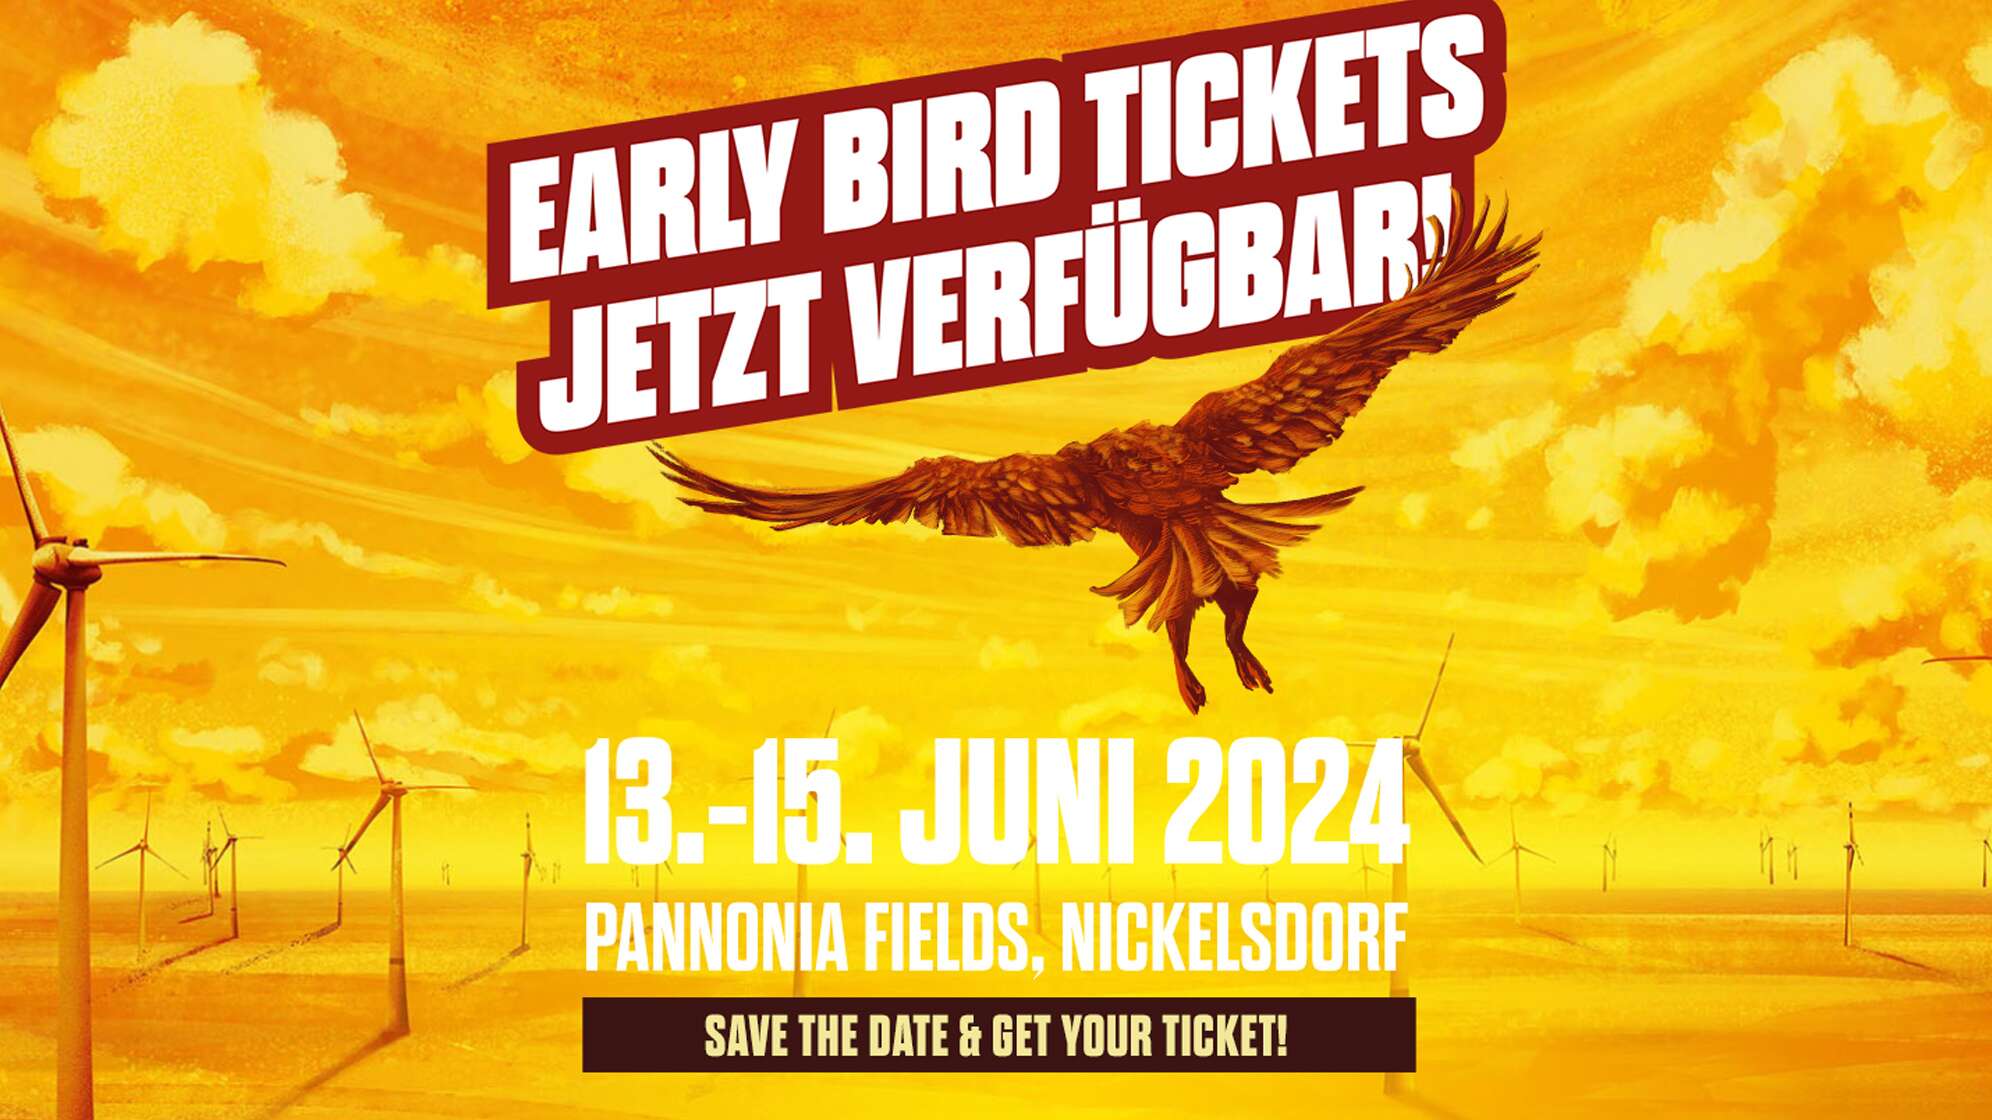 Aktionsgrafik des Nova Rock Festivals zum Early Bird Ticket